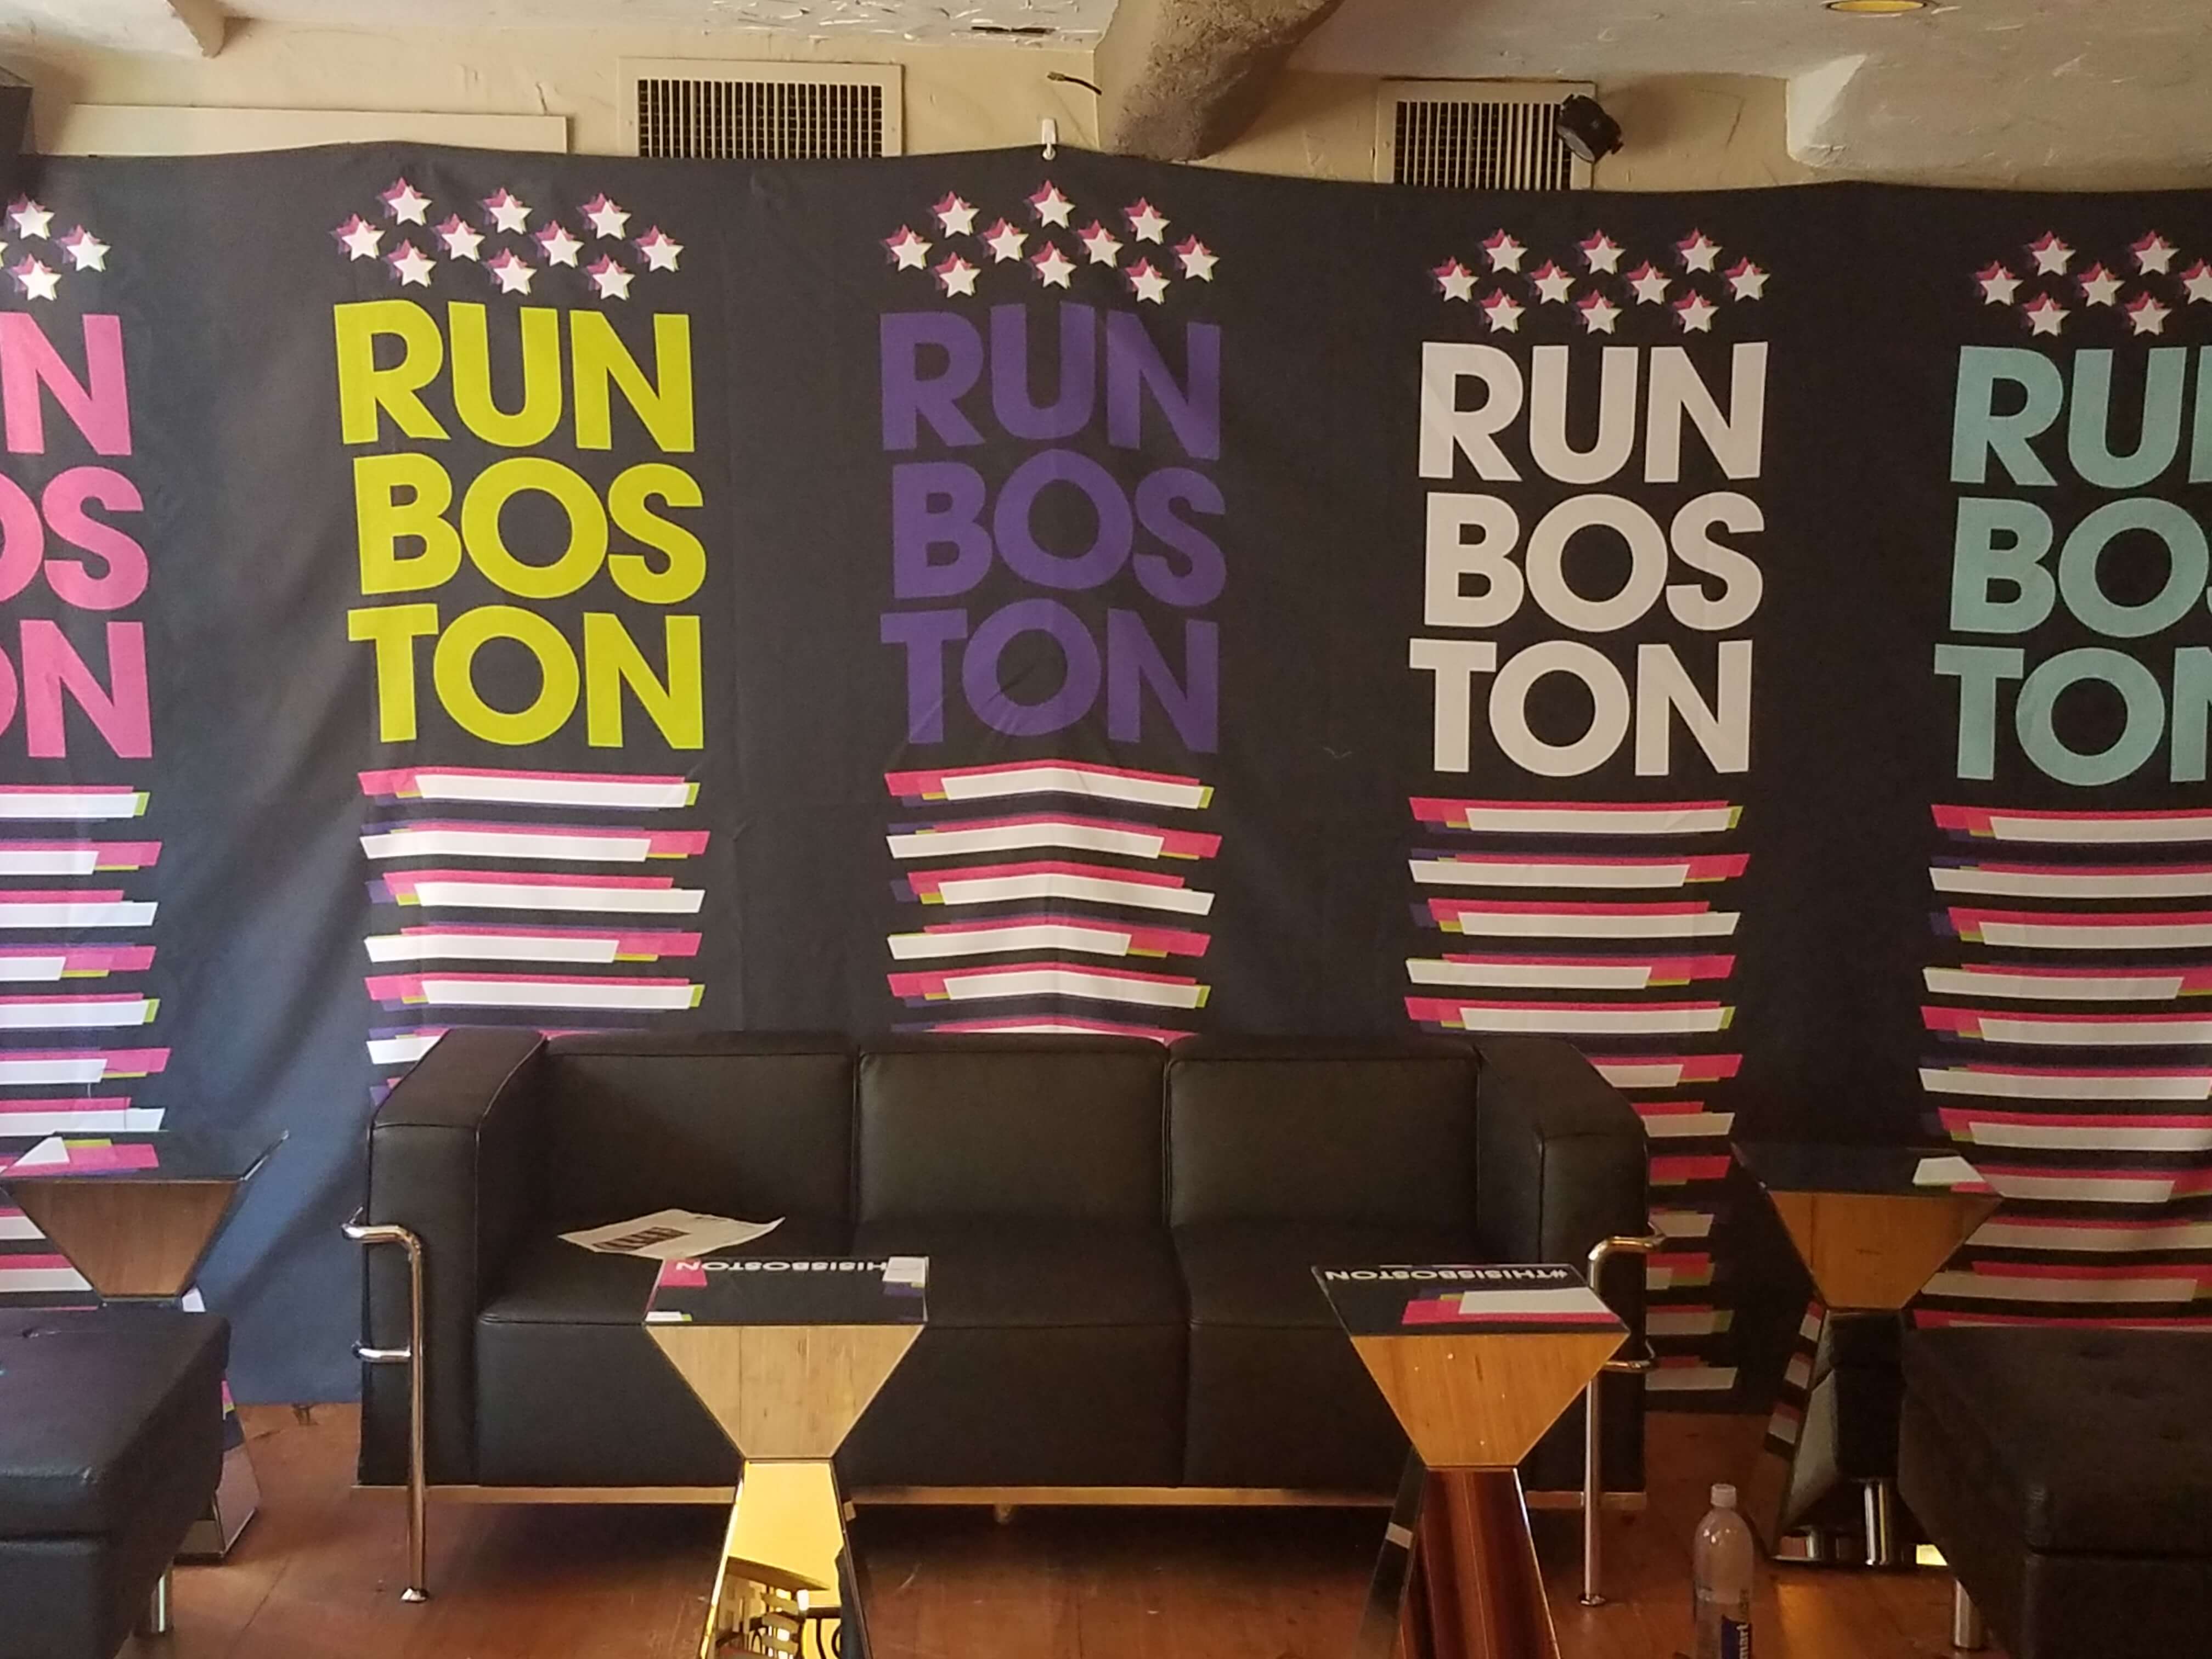 Run Boston Banner